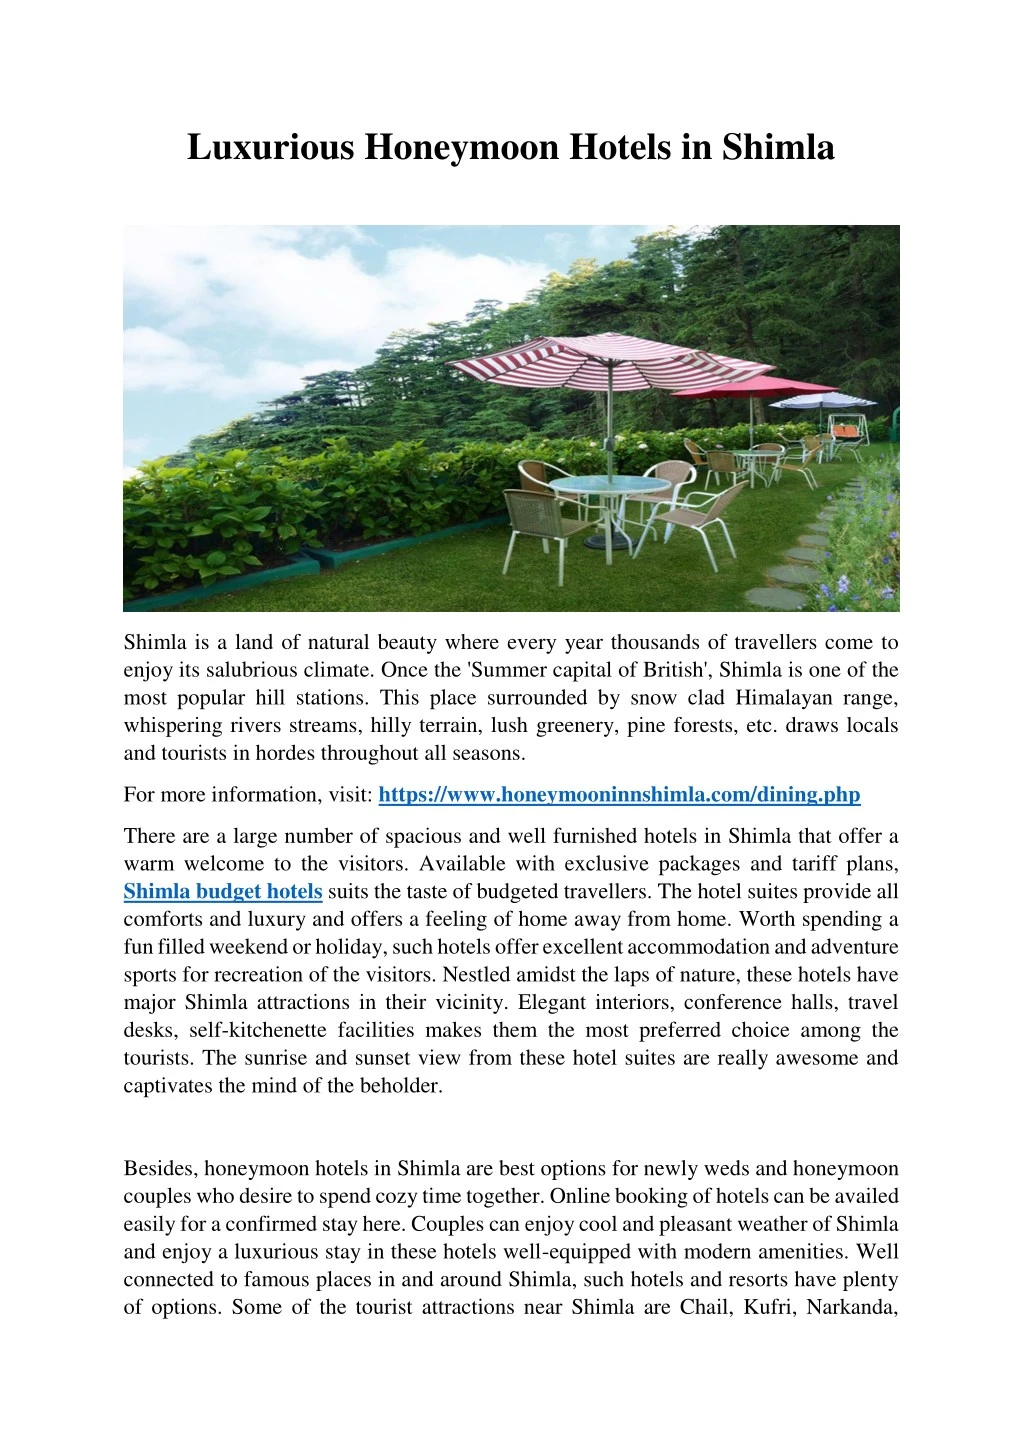 luxurious honeymoon hotels in shimla